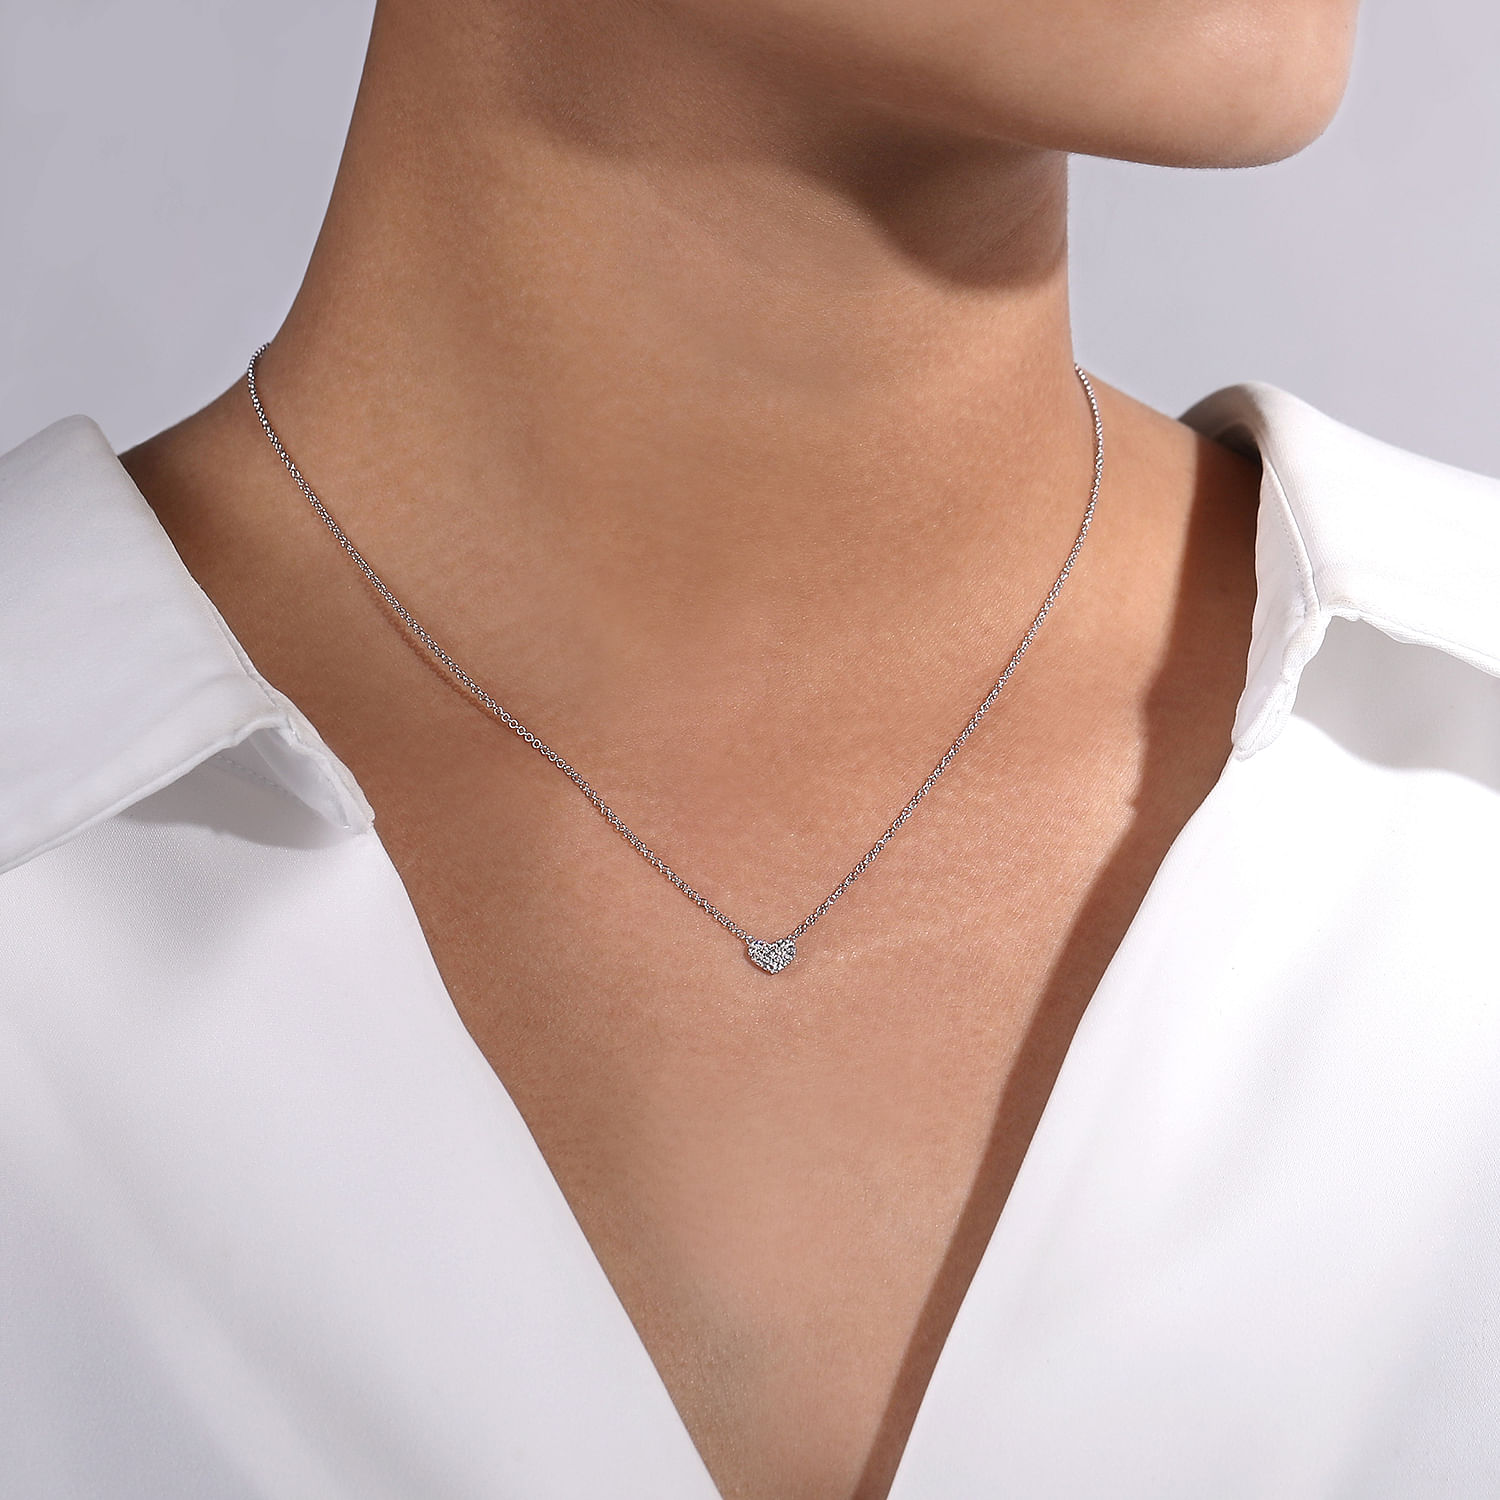 14K White Gold Pavé Diamond Pendant Heart Necklace